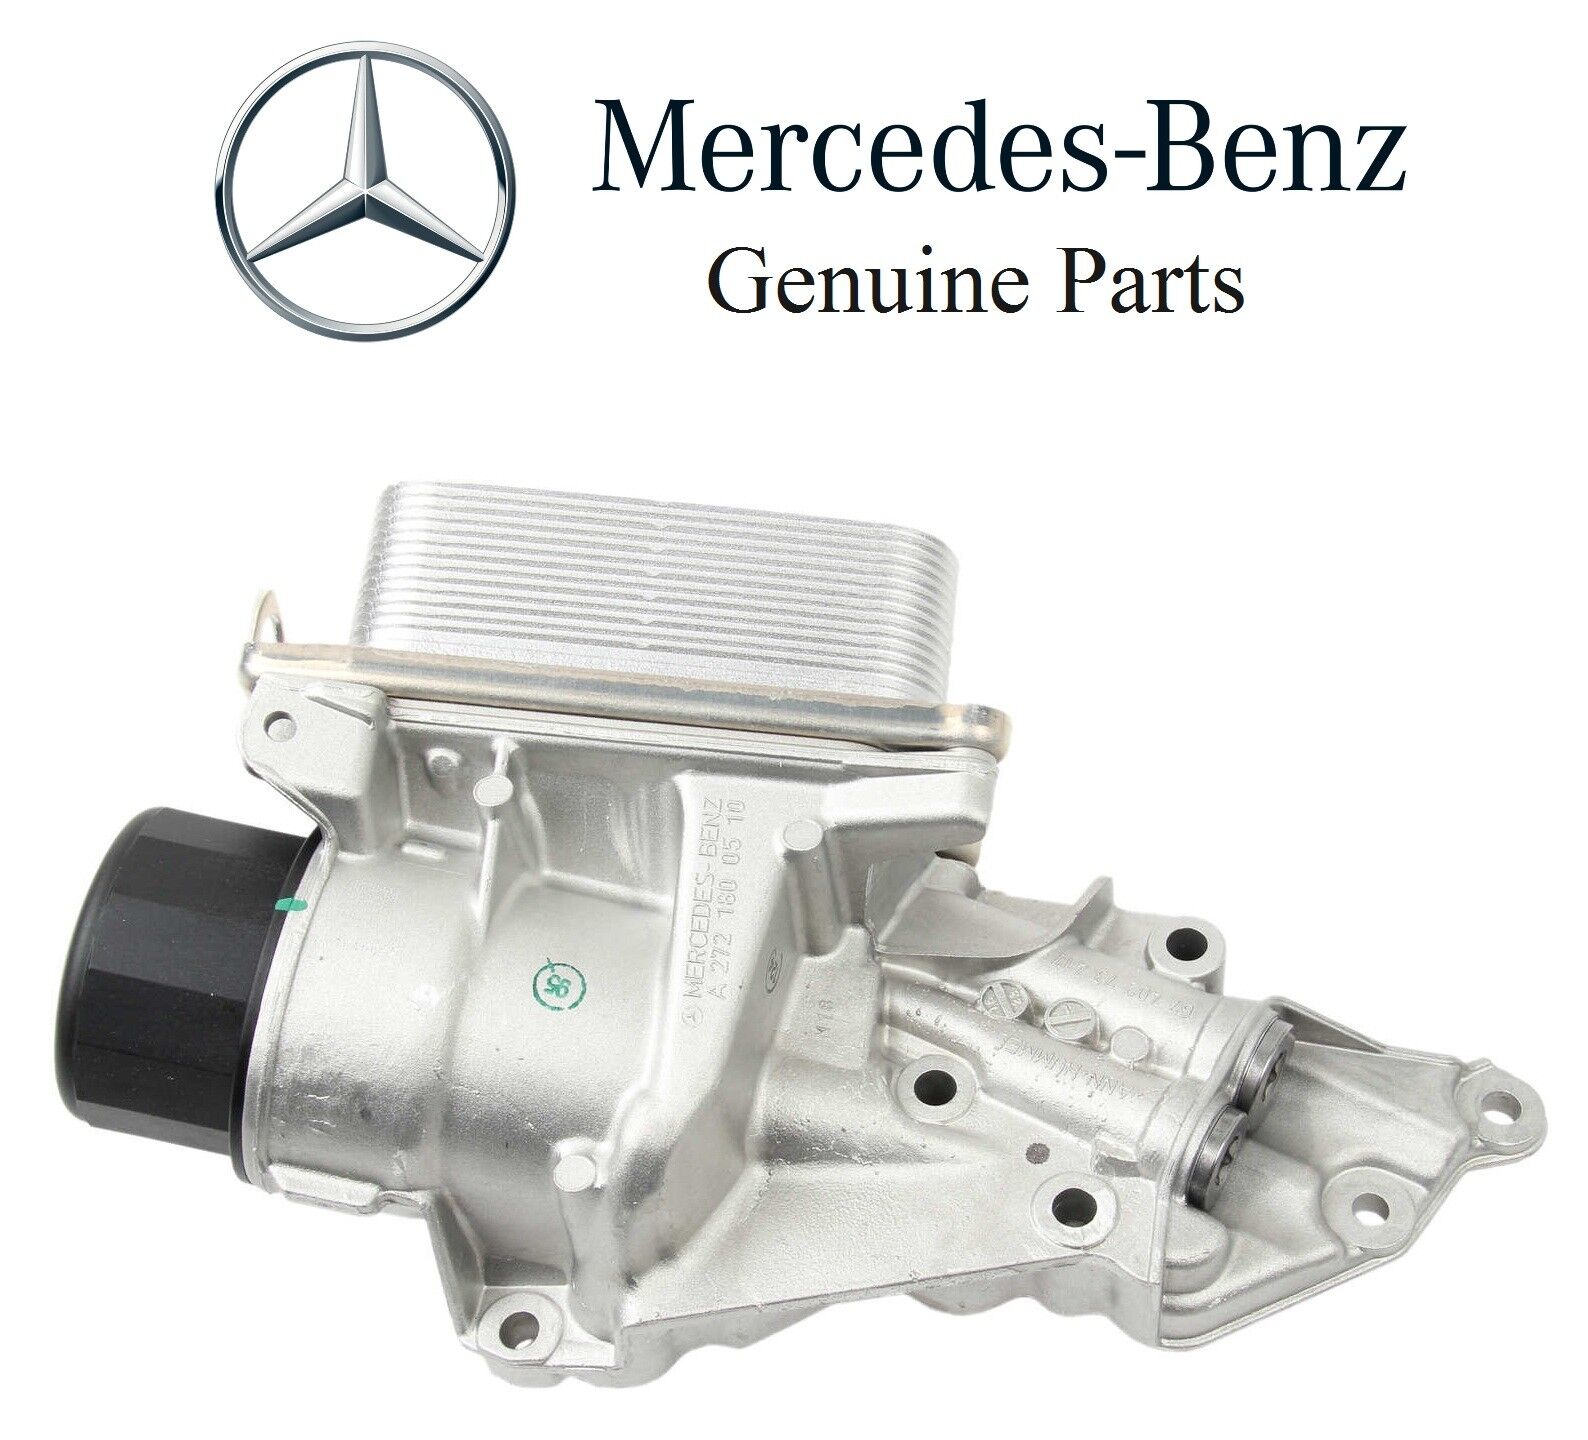 For Mercedes W203 C230 W463 X164 W164 Engine Oil Filter Housing w Cooler Genuine